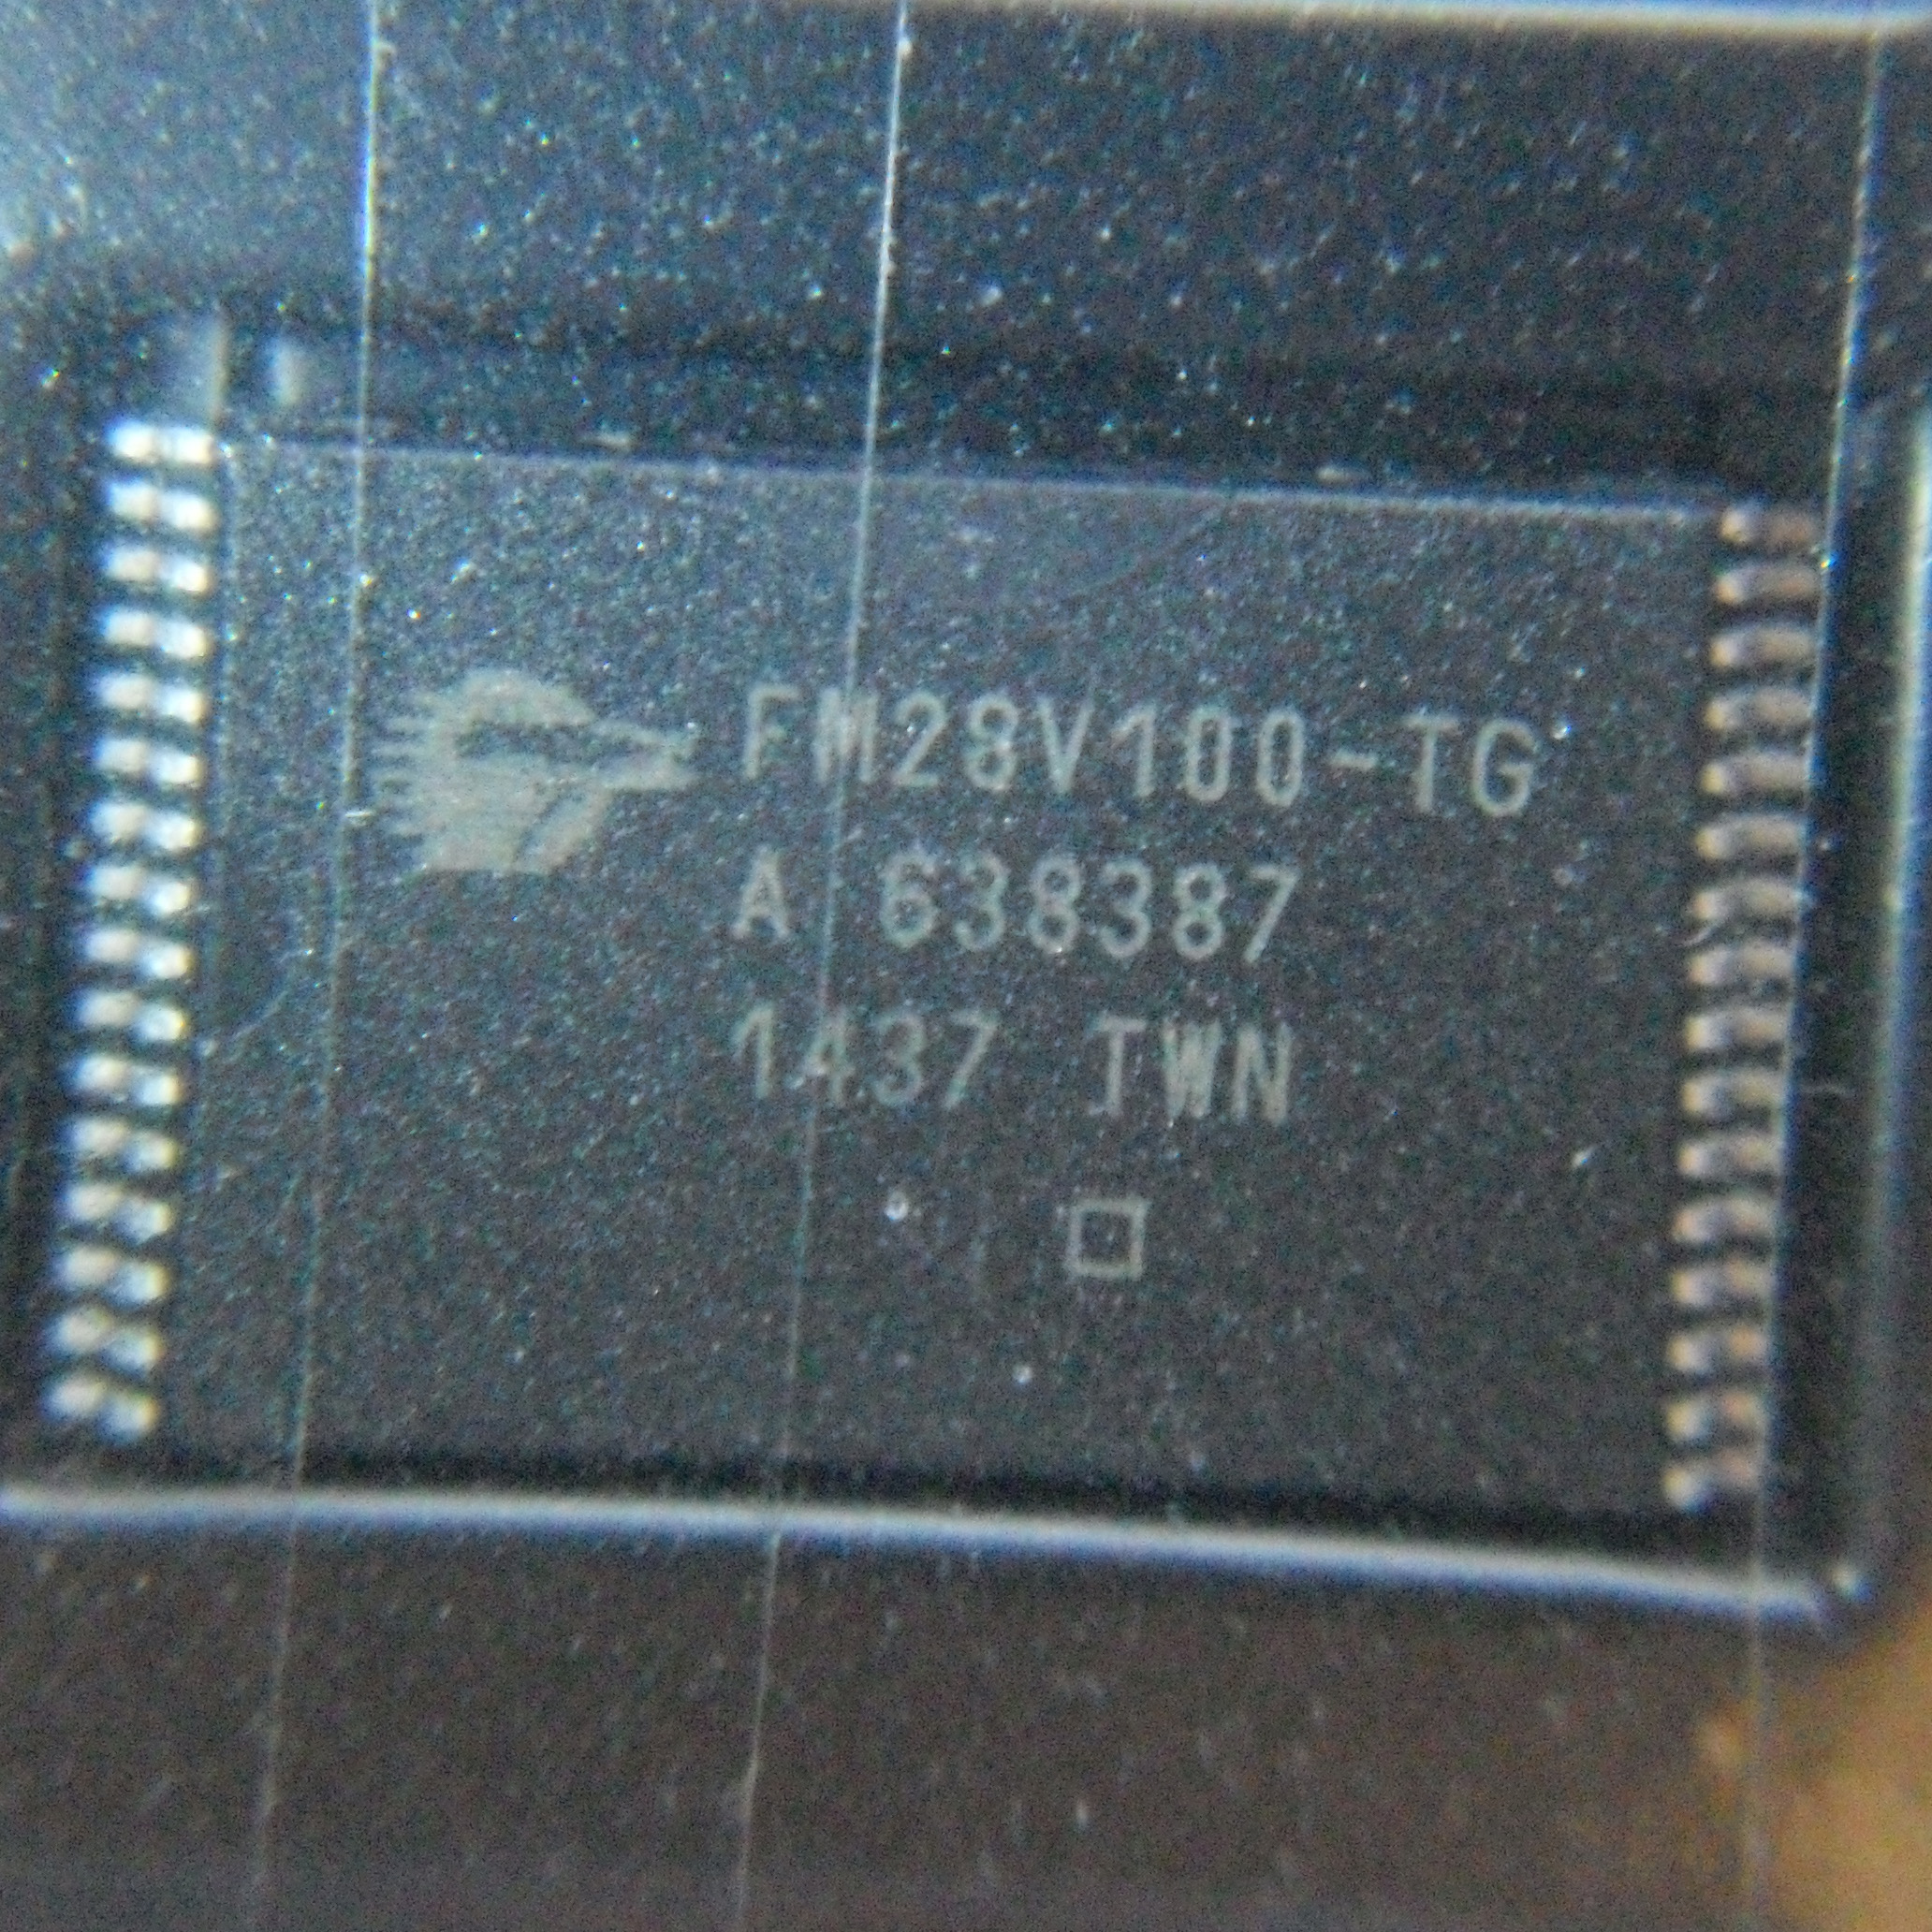 FM28V100-TGTR-Cypress